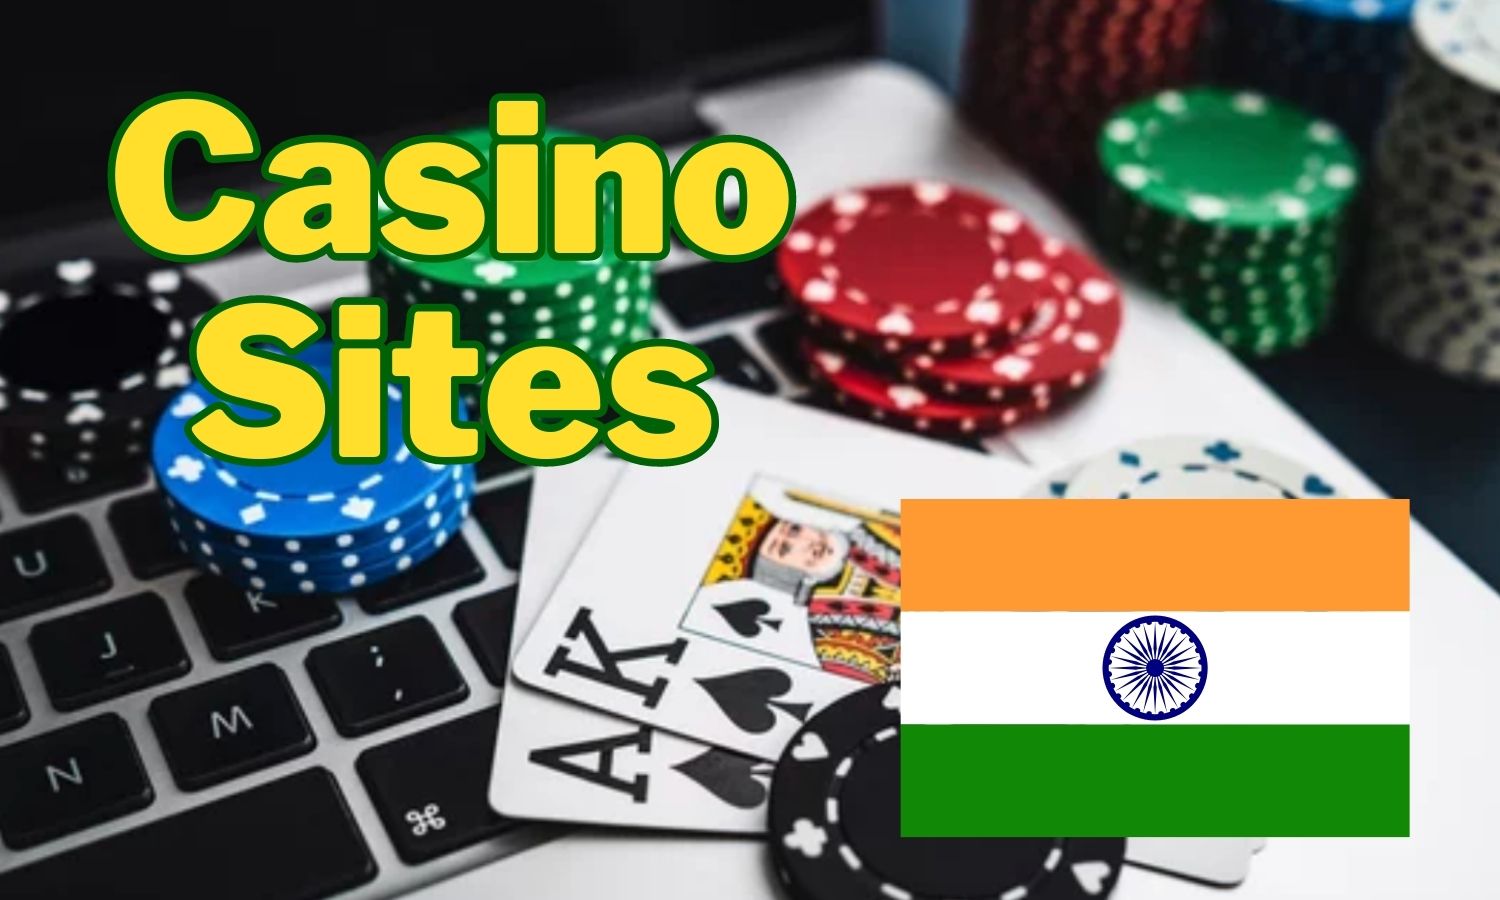 Top Indian casino websites detailed overview